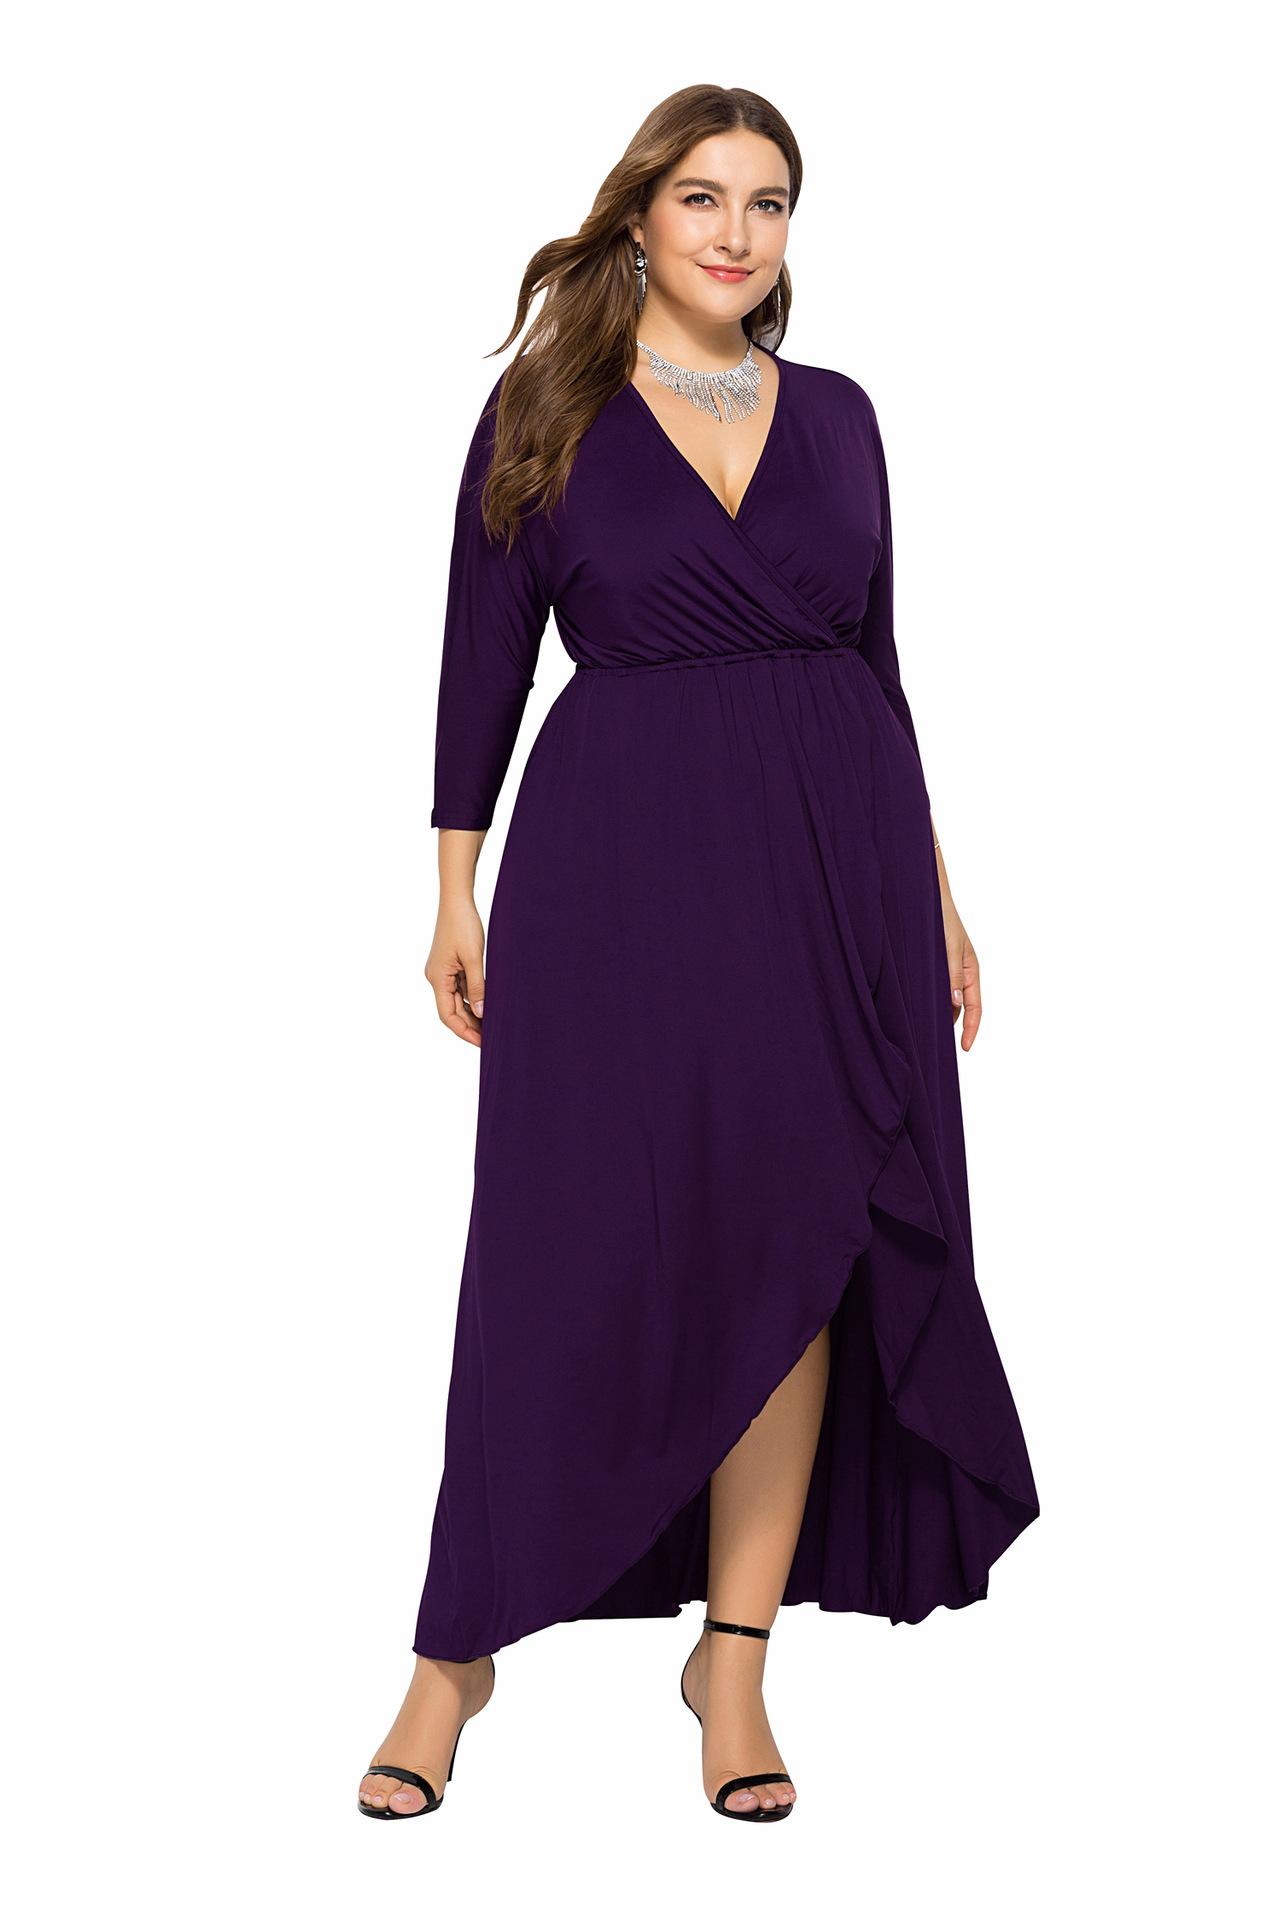 Villain etik Eftermæle Women Asymmetrical Maxi Dress V-neck Long Sleeve Plus Size Slim Long Formal  Evening Party Dress Purp on Luulla